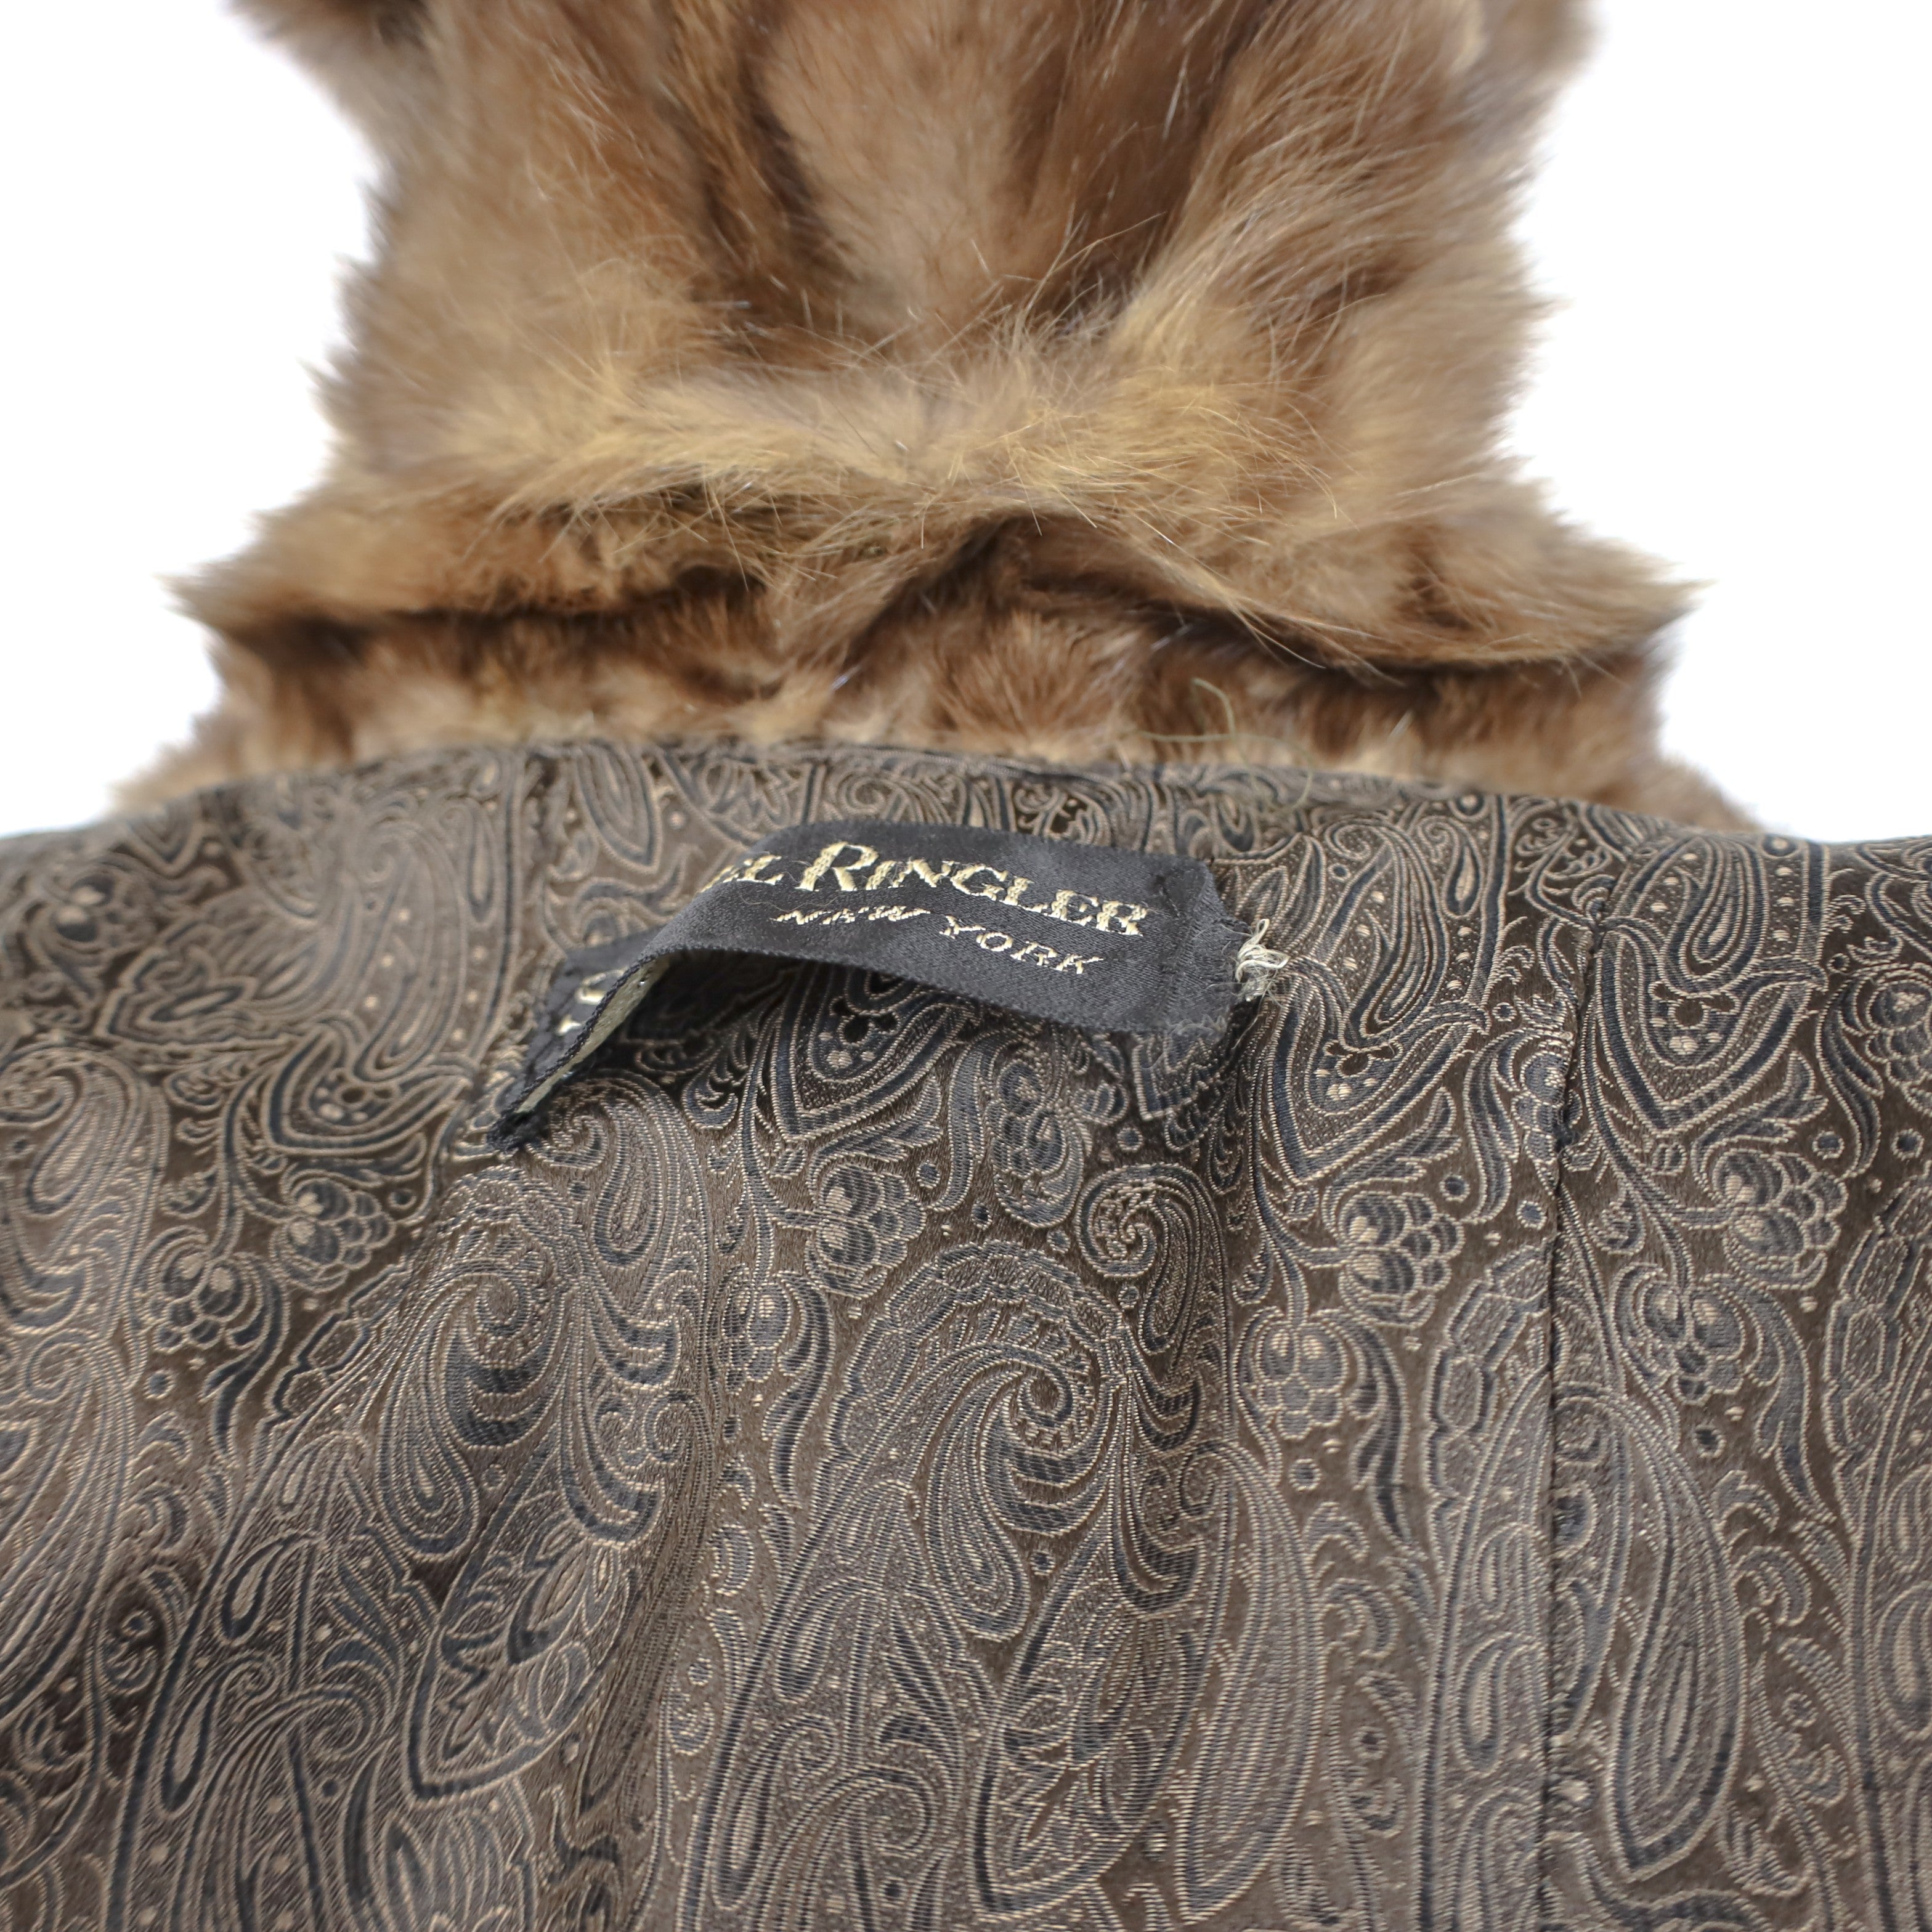 Sable Fur Cuffs - furoutlet - fur coat, fur jackets, fur hats